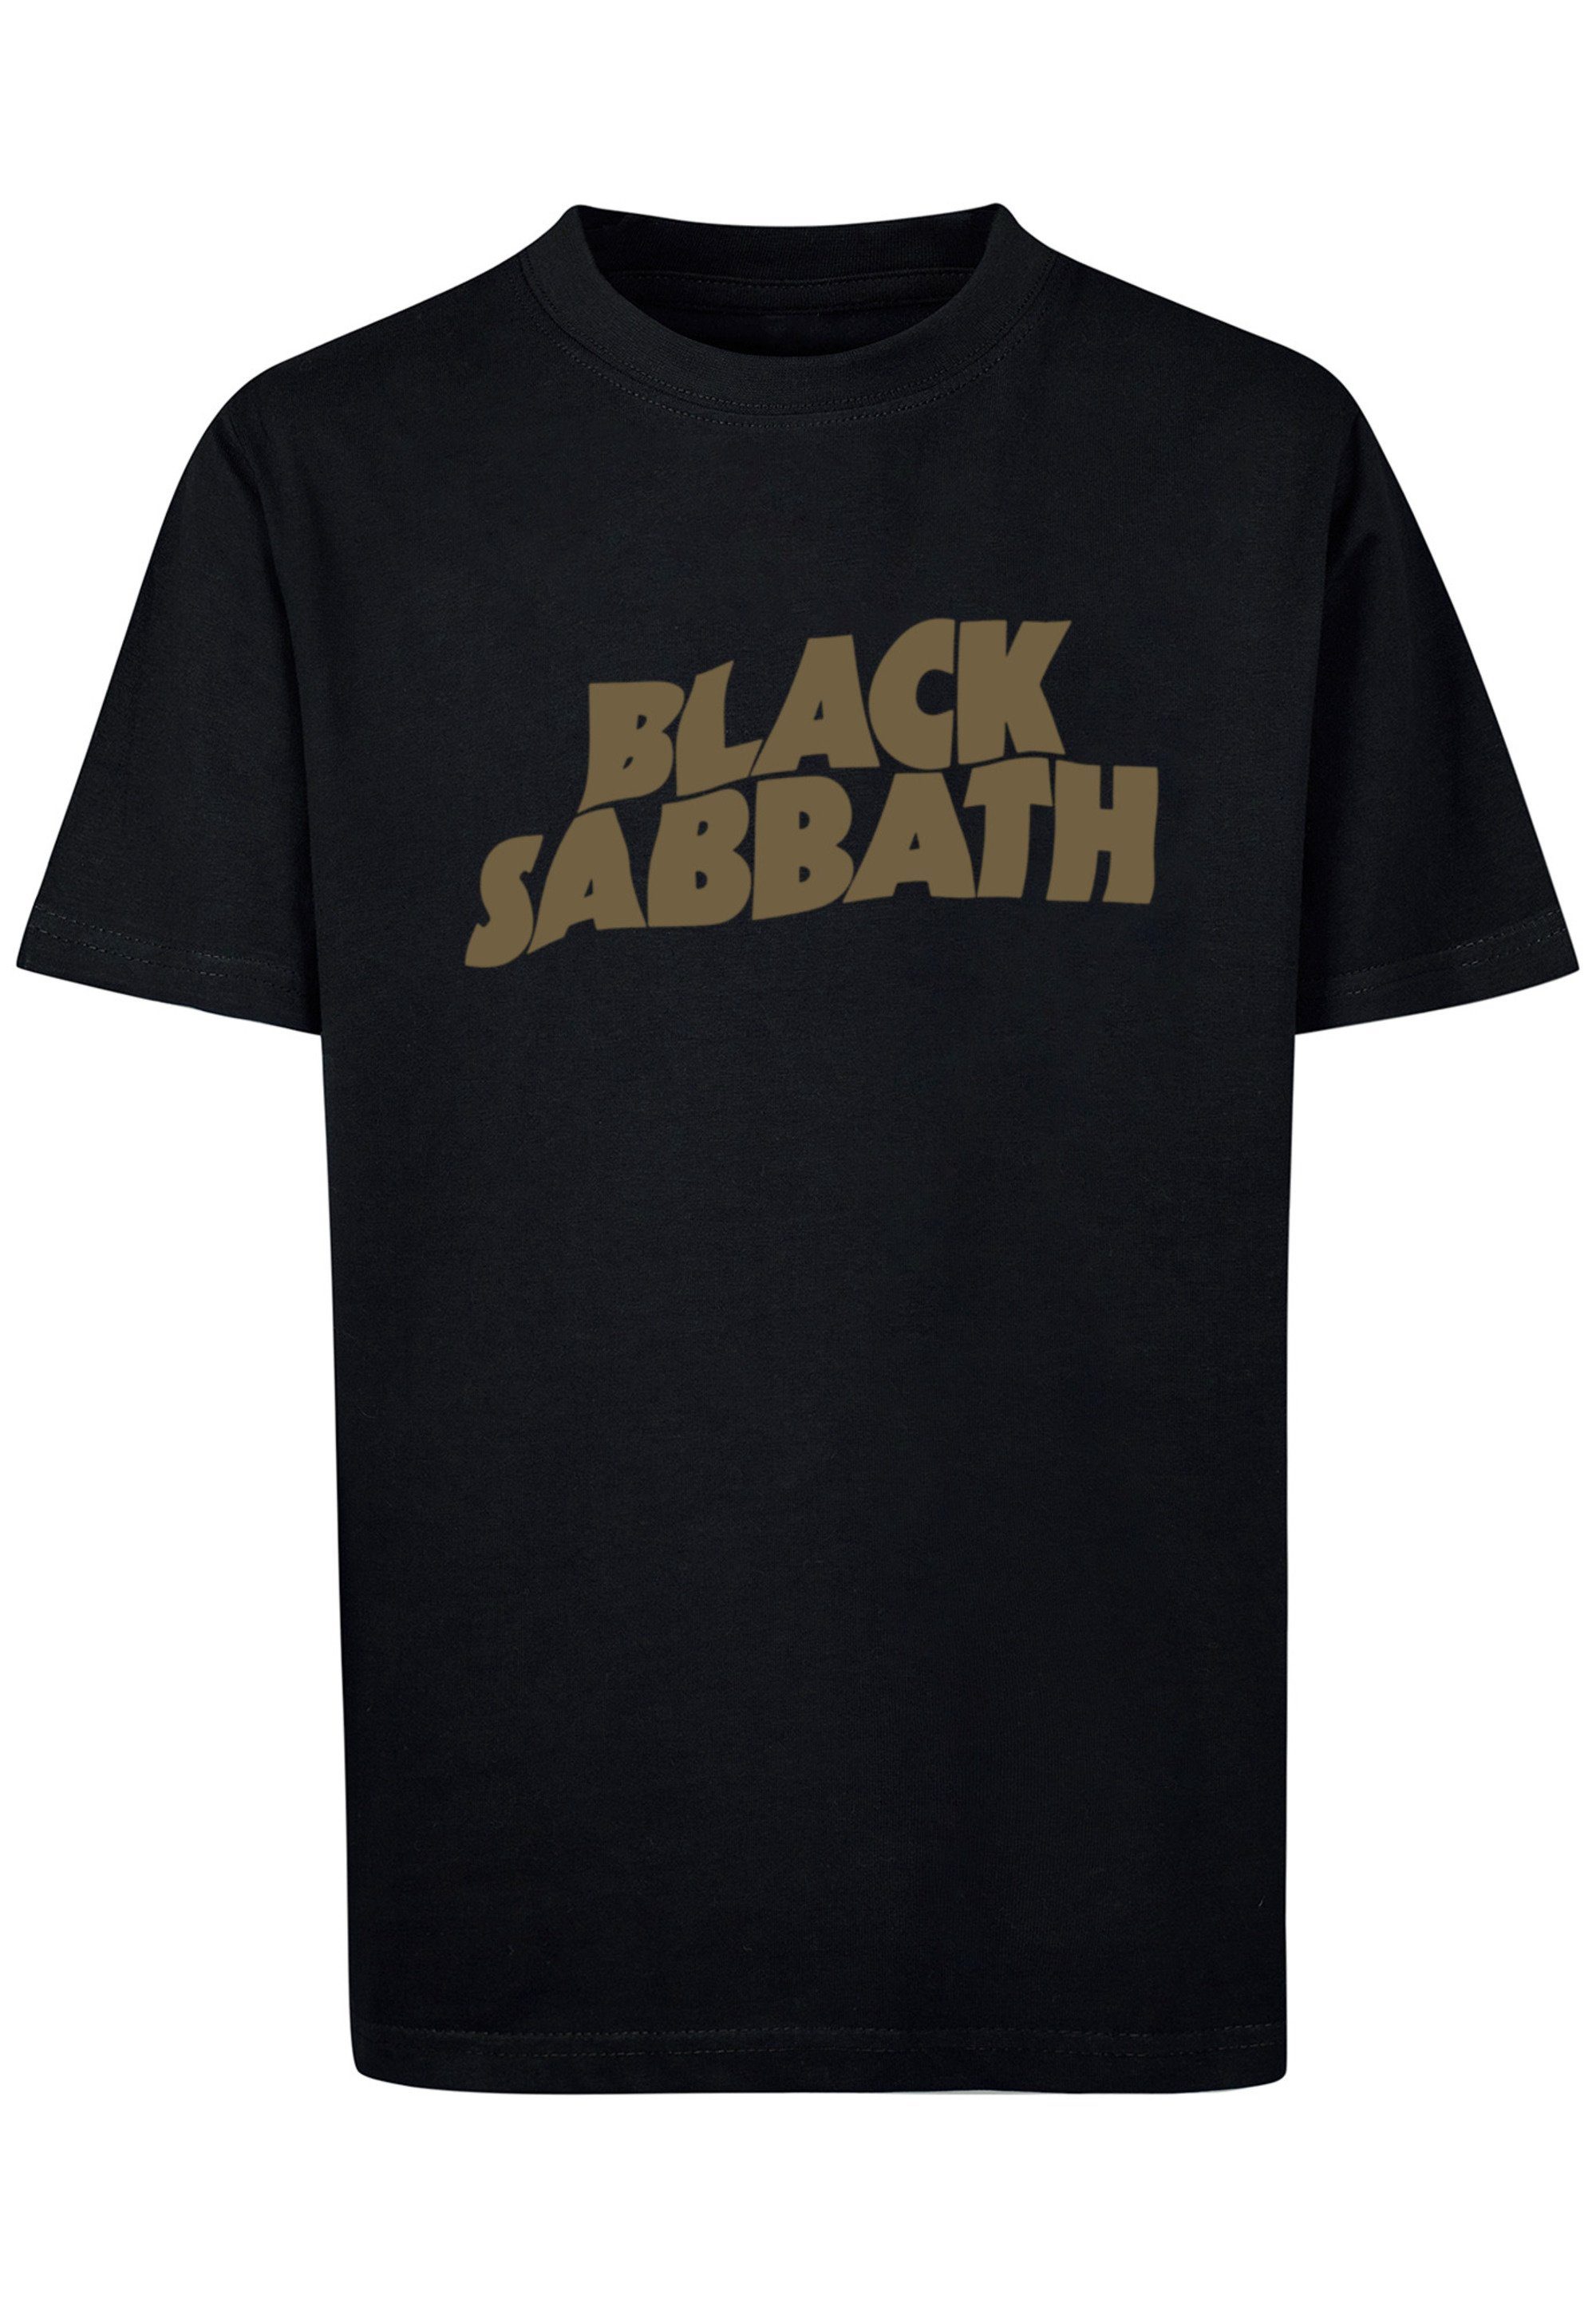 F4NT4STIC T-Shirt Band 1978 Metal Tour Zip Sabbath US Print Black Black